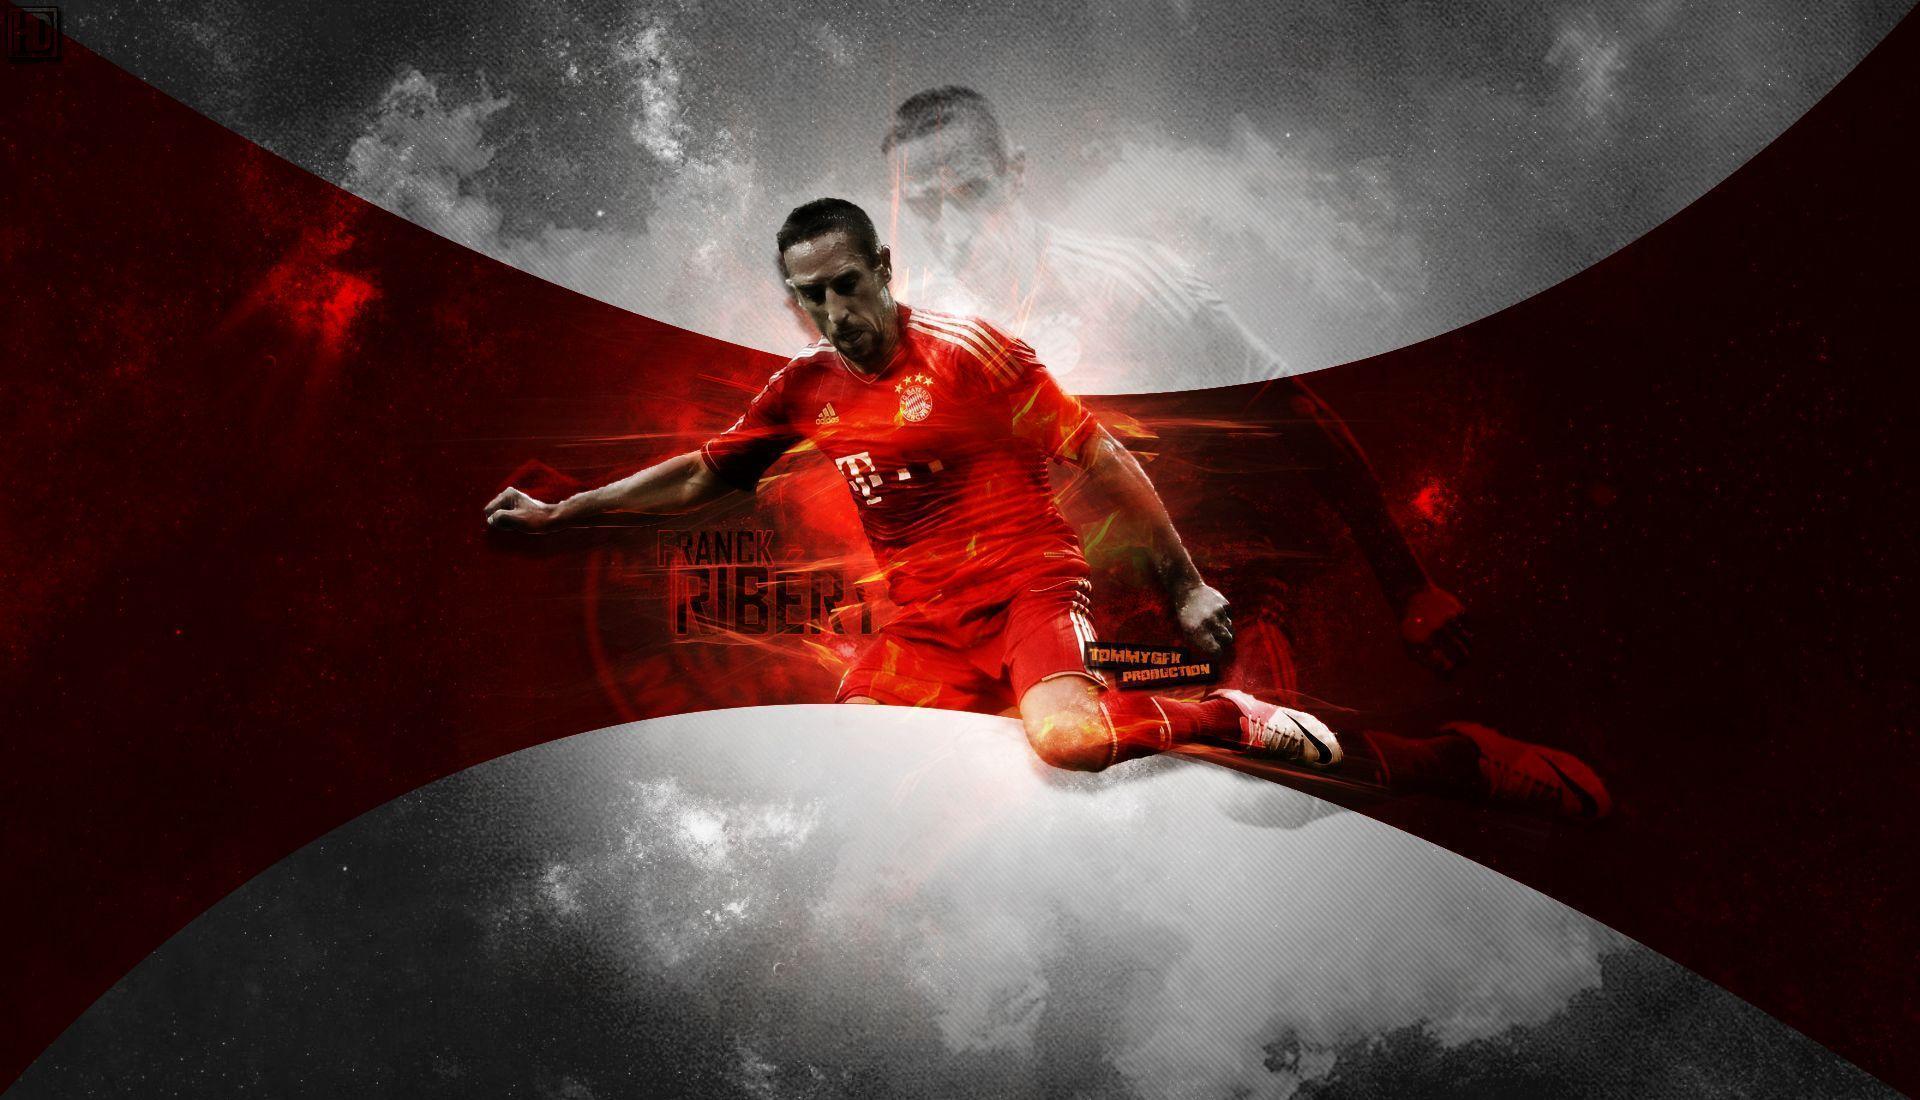 Franck Ribéry. HD Football Wallpaper